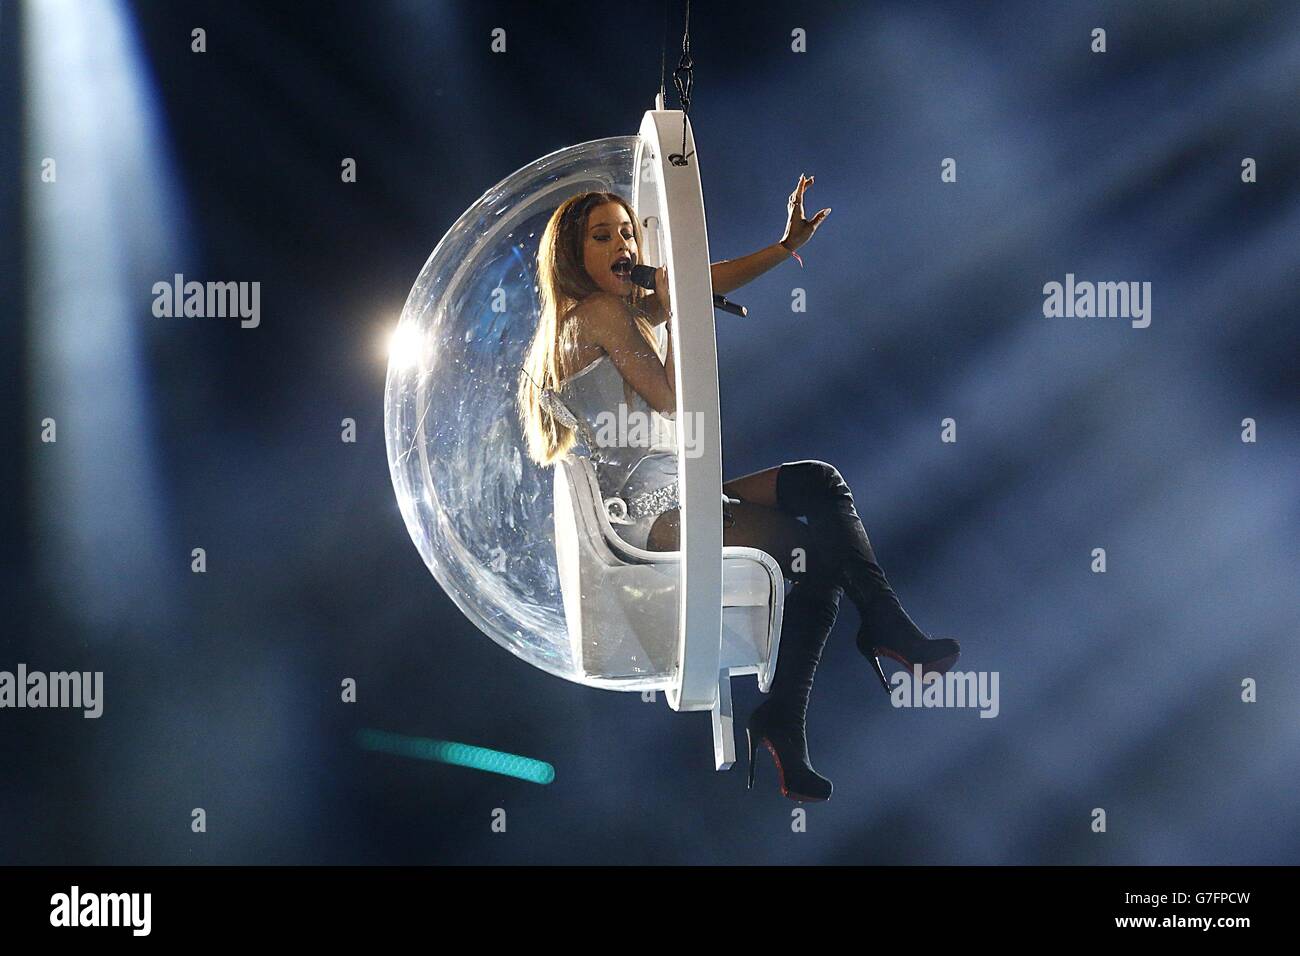 MTV Europe Music Awards - Mostra - Glasgow. Ariana Grande si esibisce durante i MTV Europe Music Awards 2014 alla SSE Hydro di Glasgow, Scozia. Foto Stock